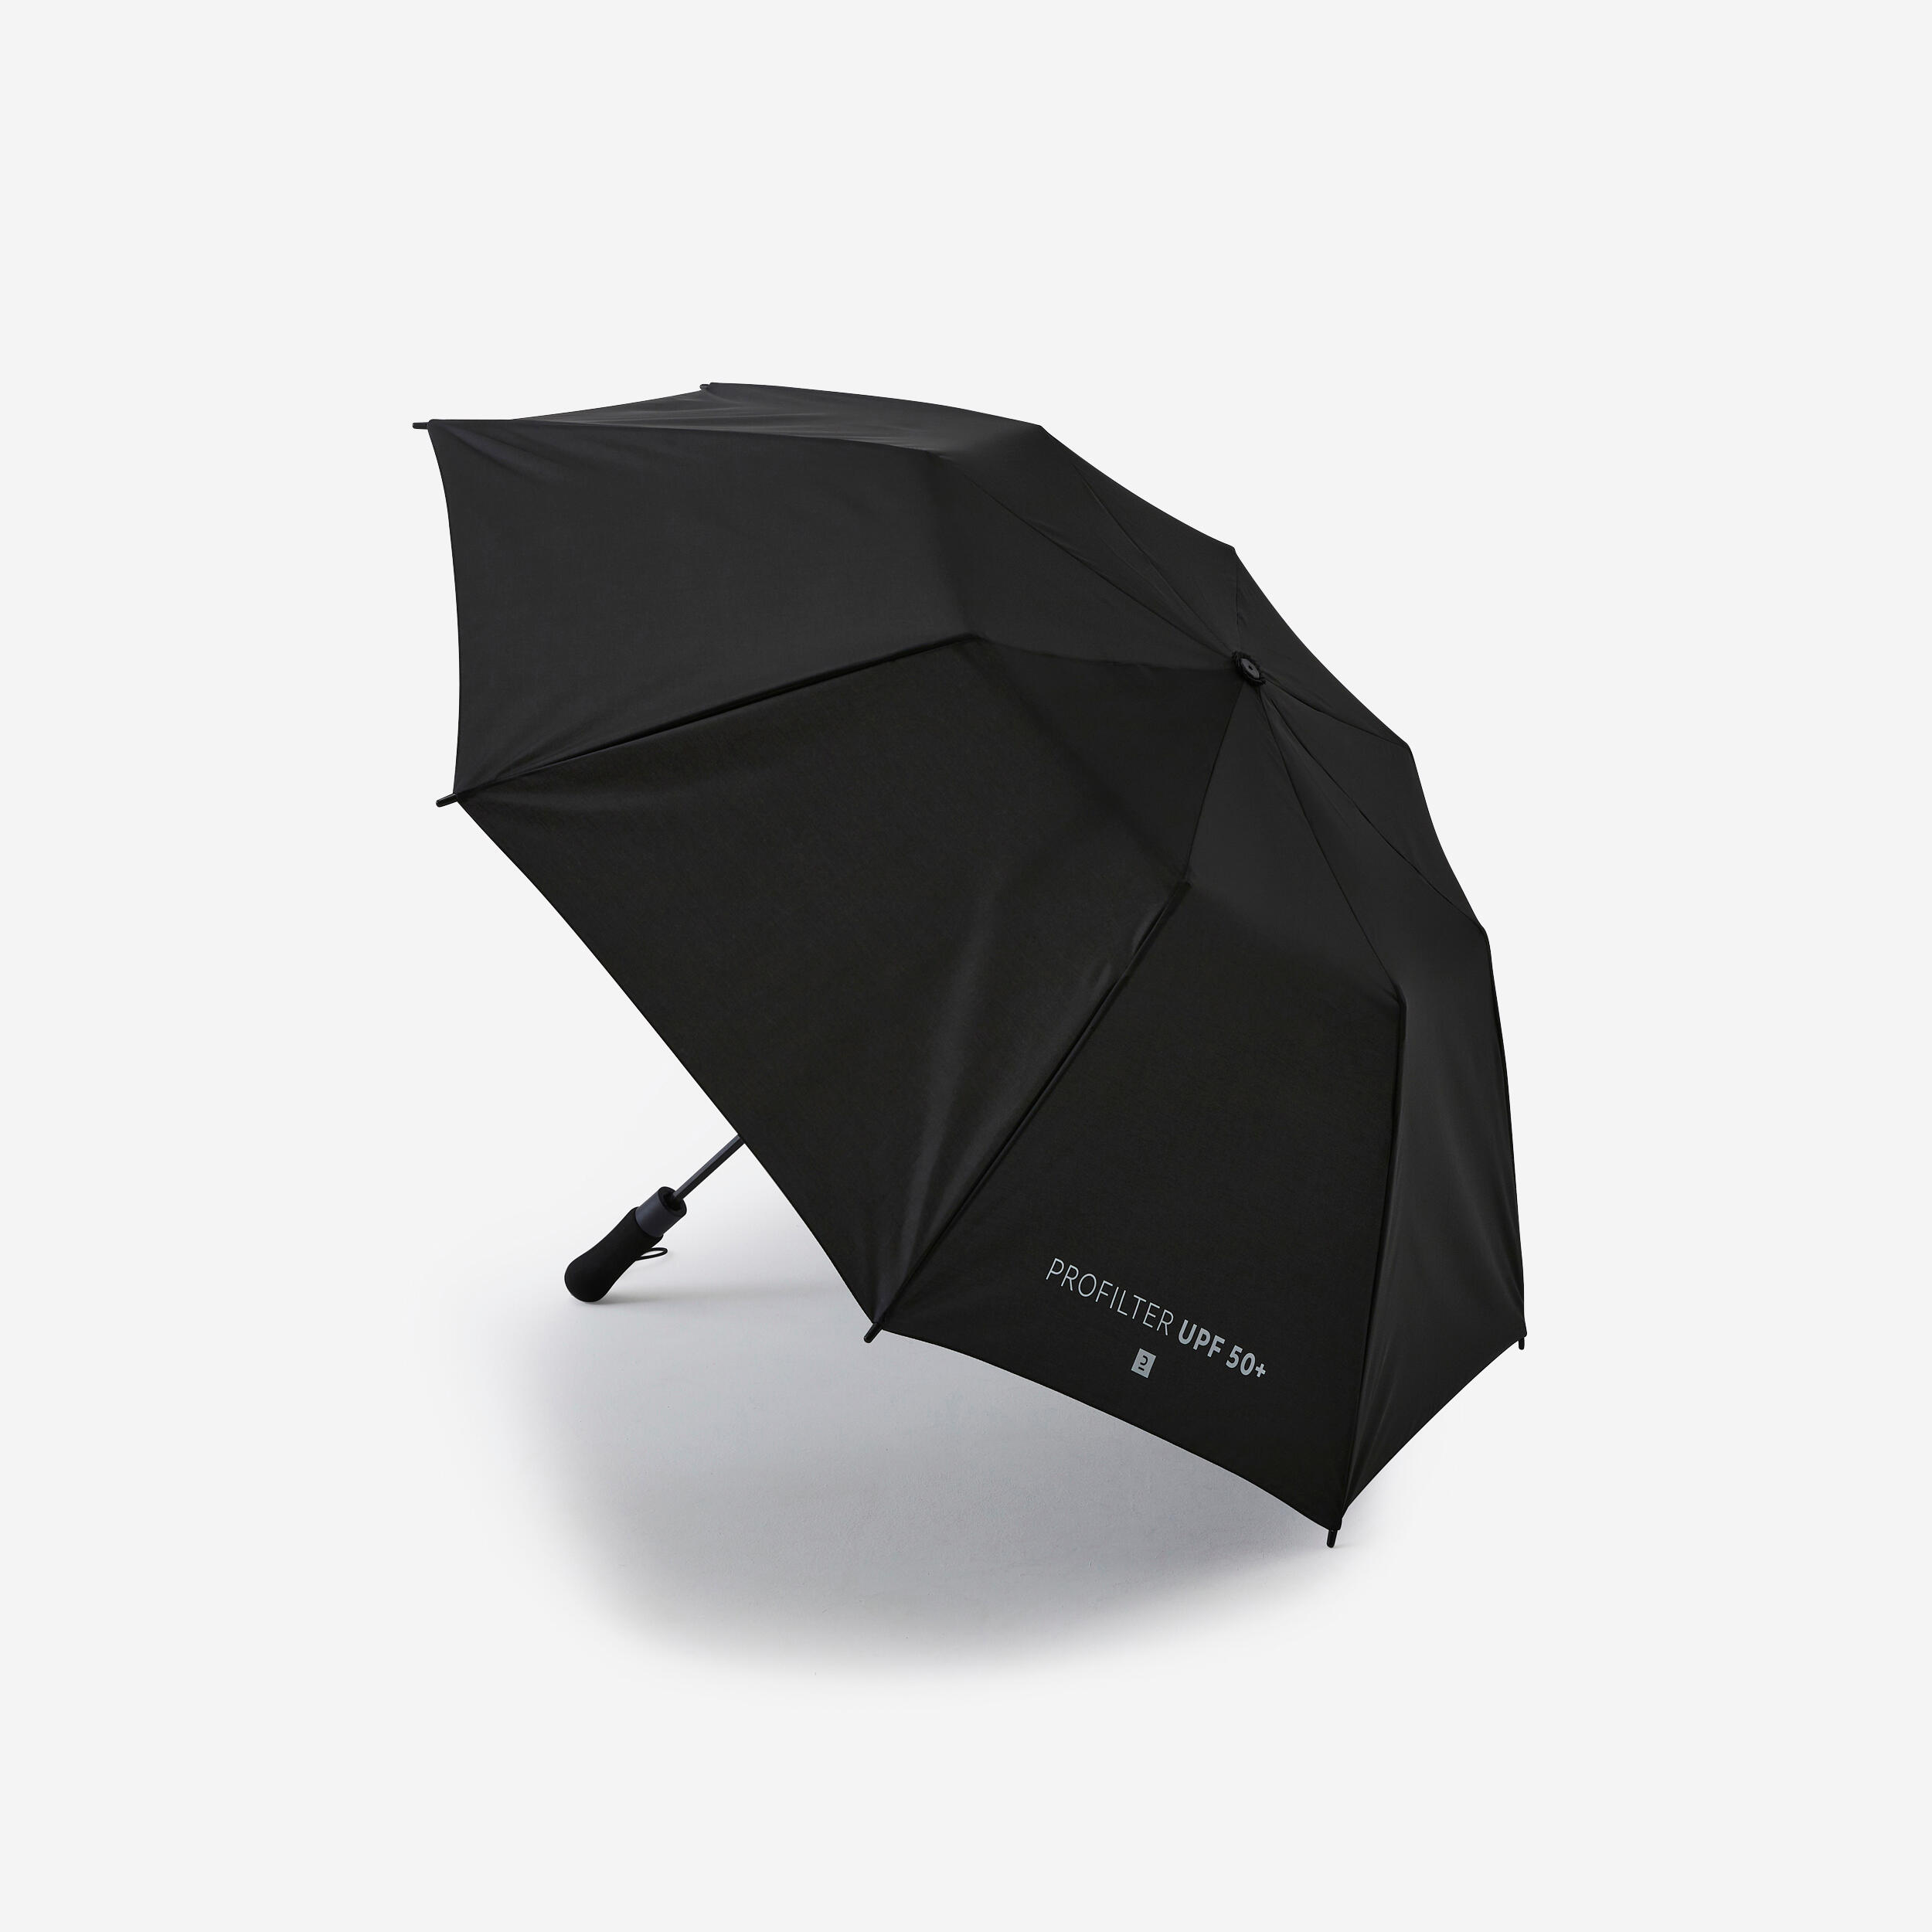 parapluie small - profilter noir - decathlon